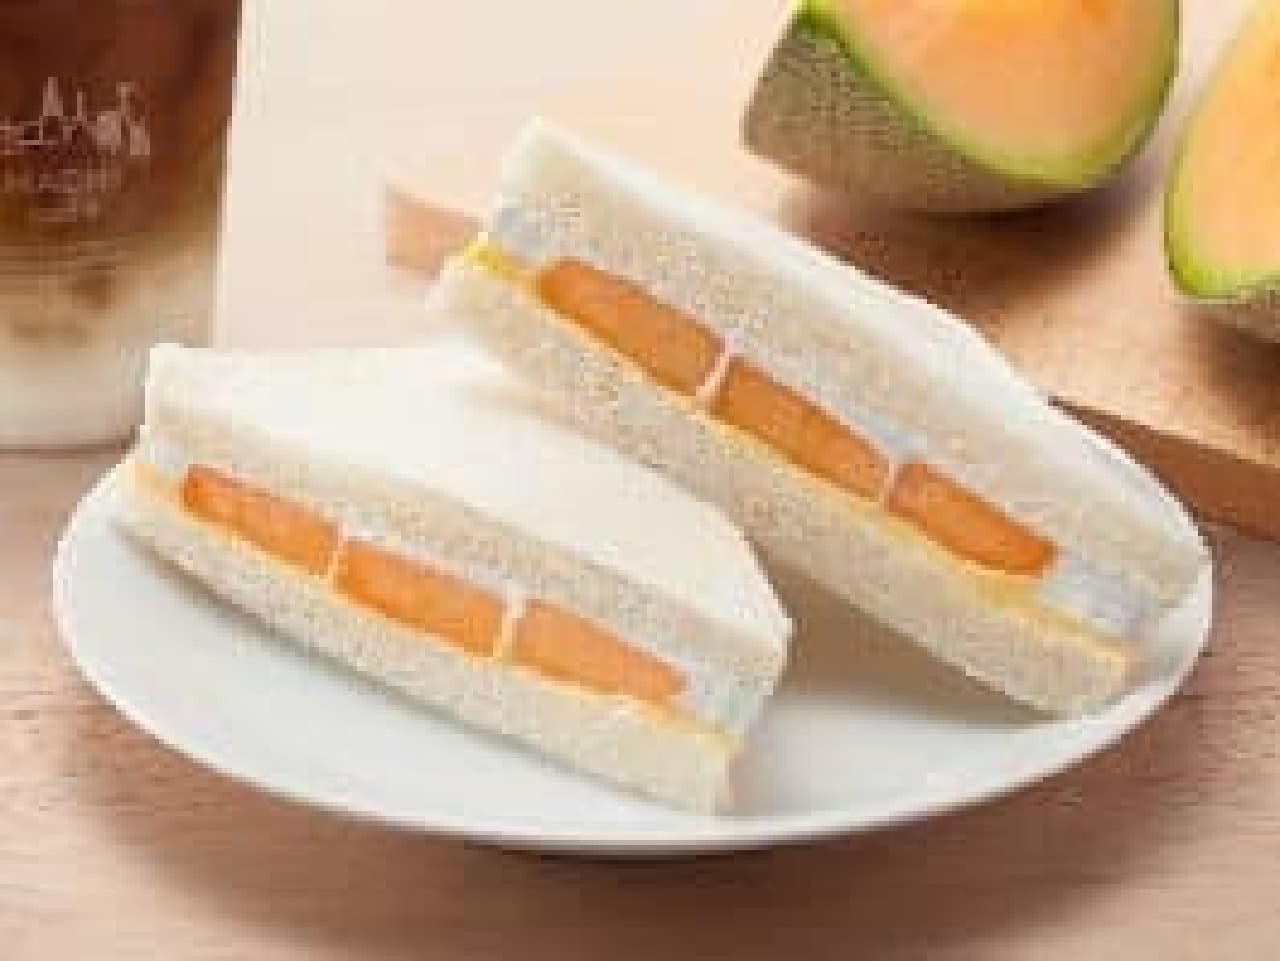 "Yubari Melon Sandwich" using Yubari Melon in luxury